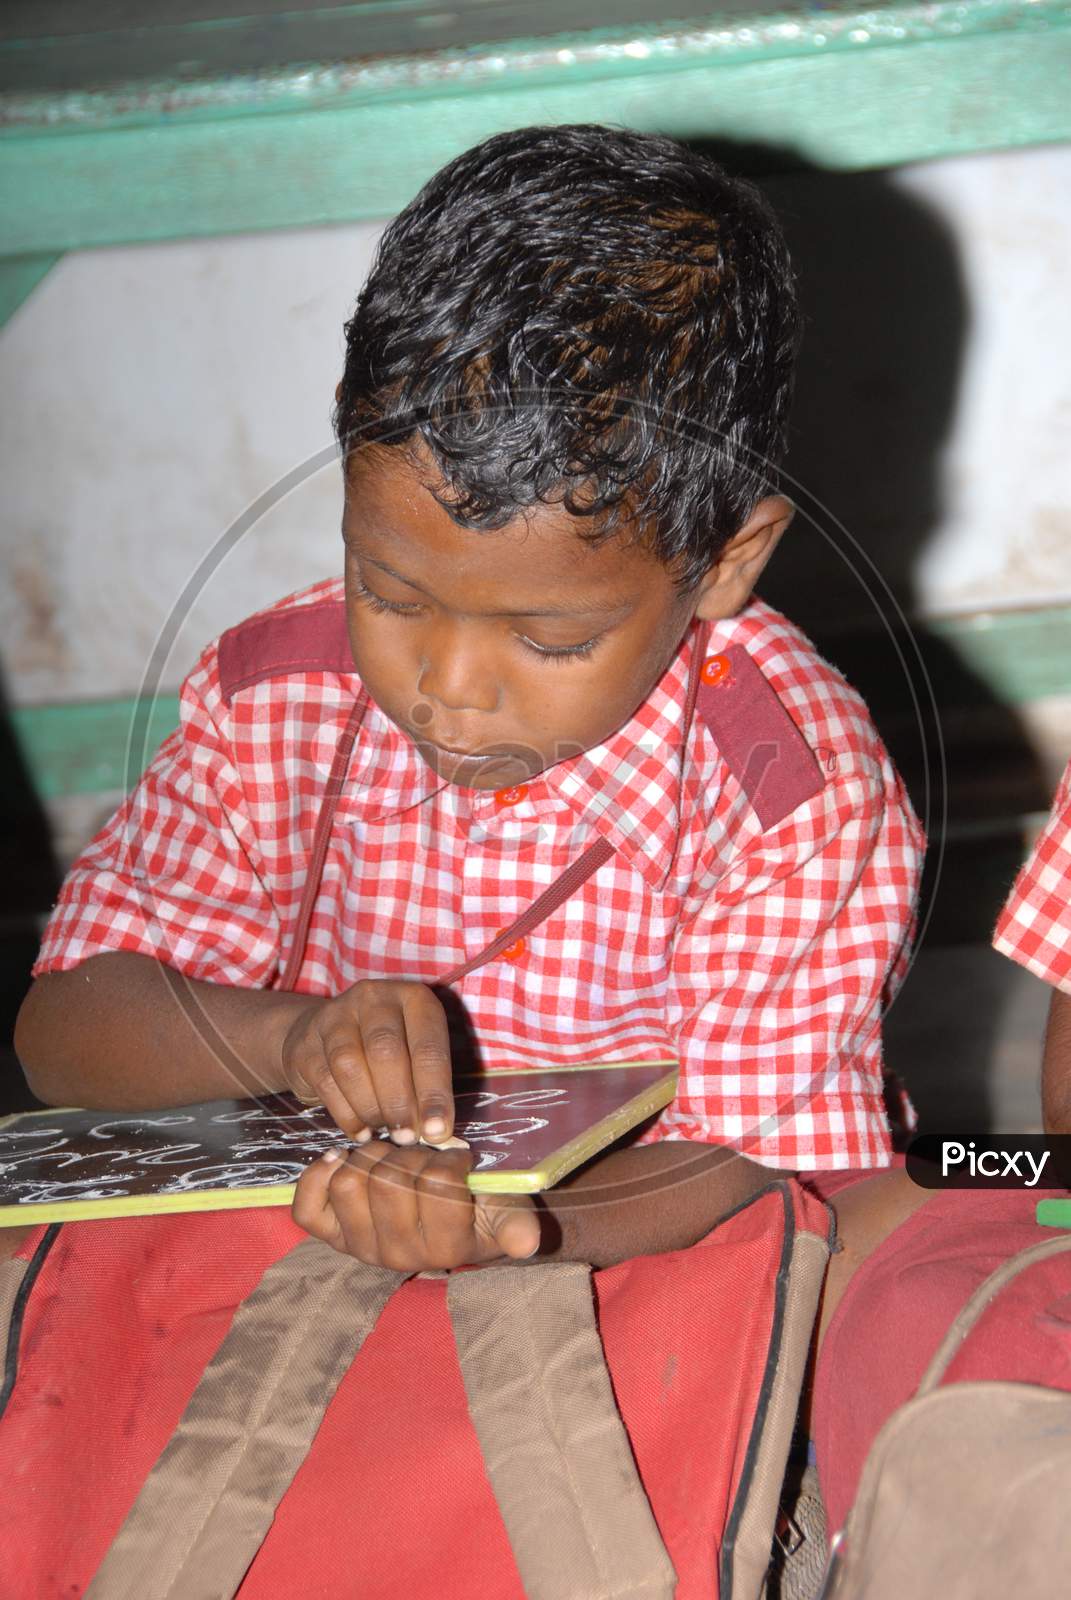 Indian School Kids Reading In an Classroom